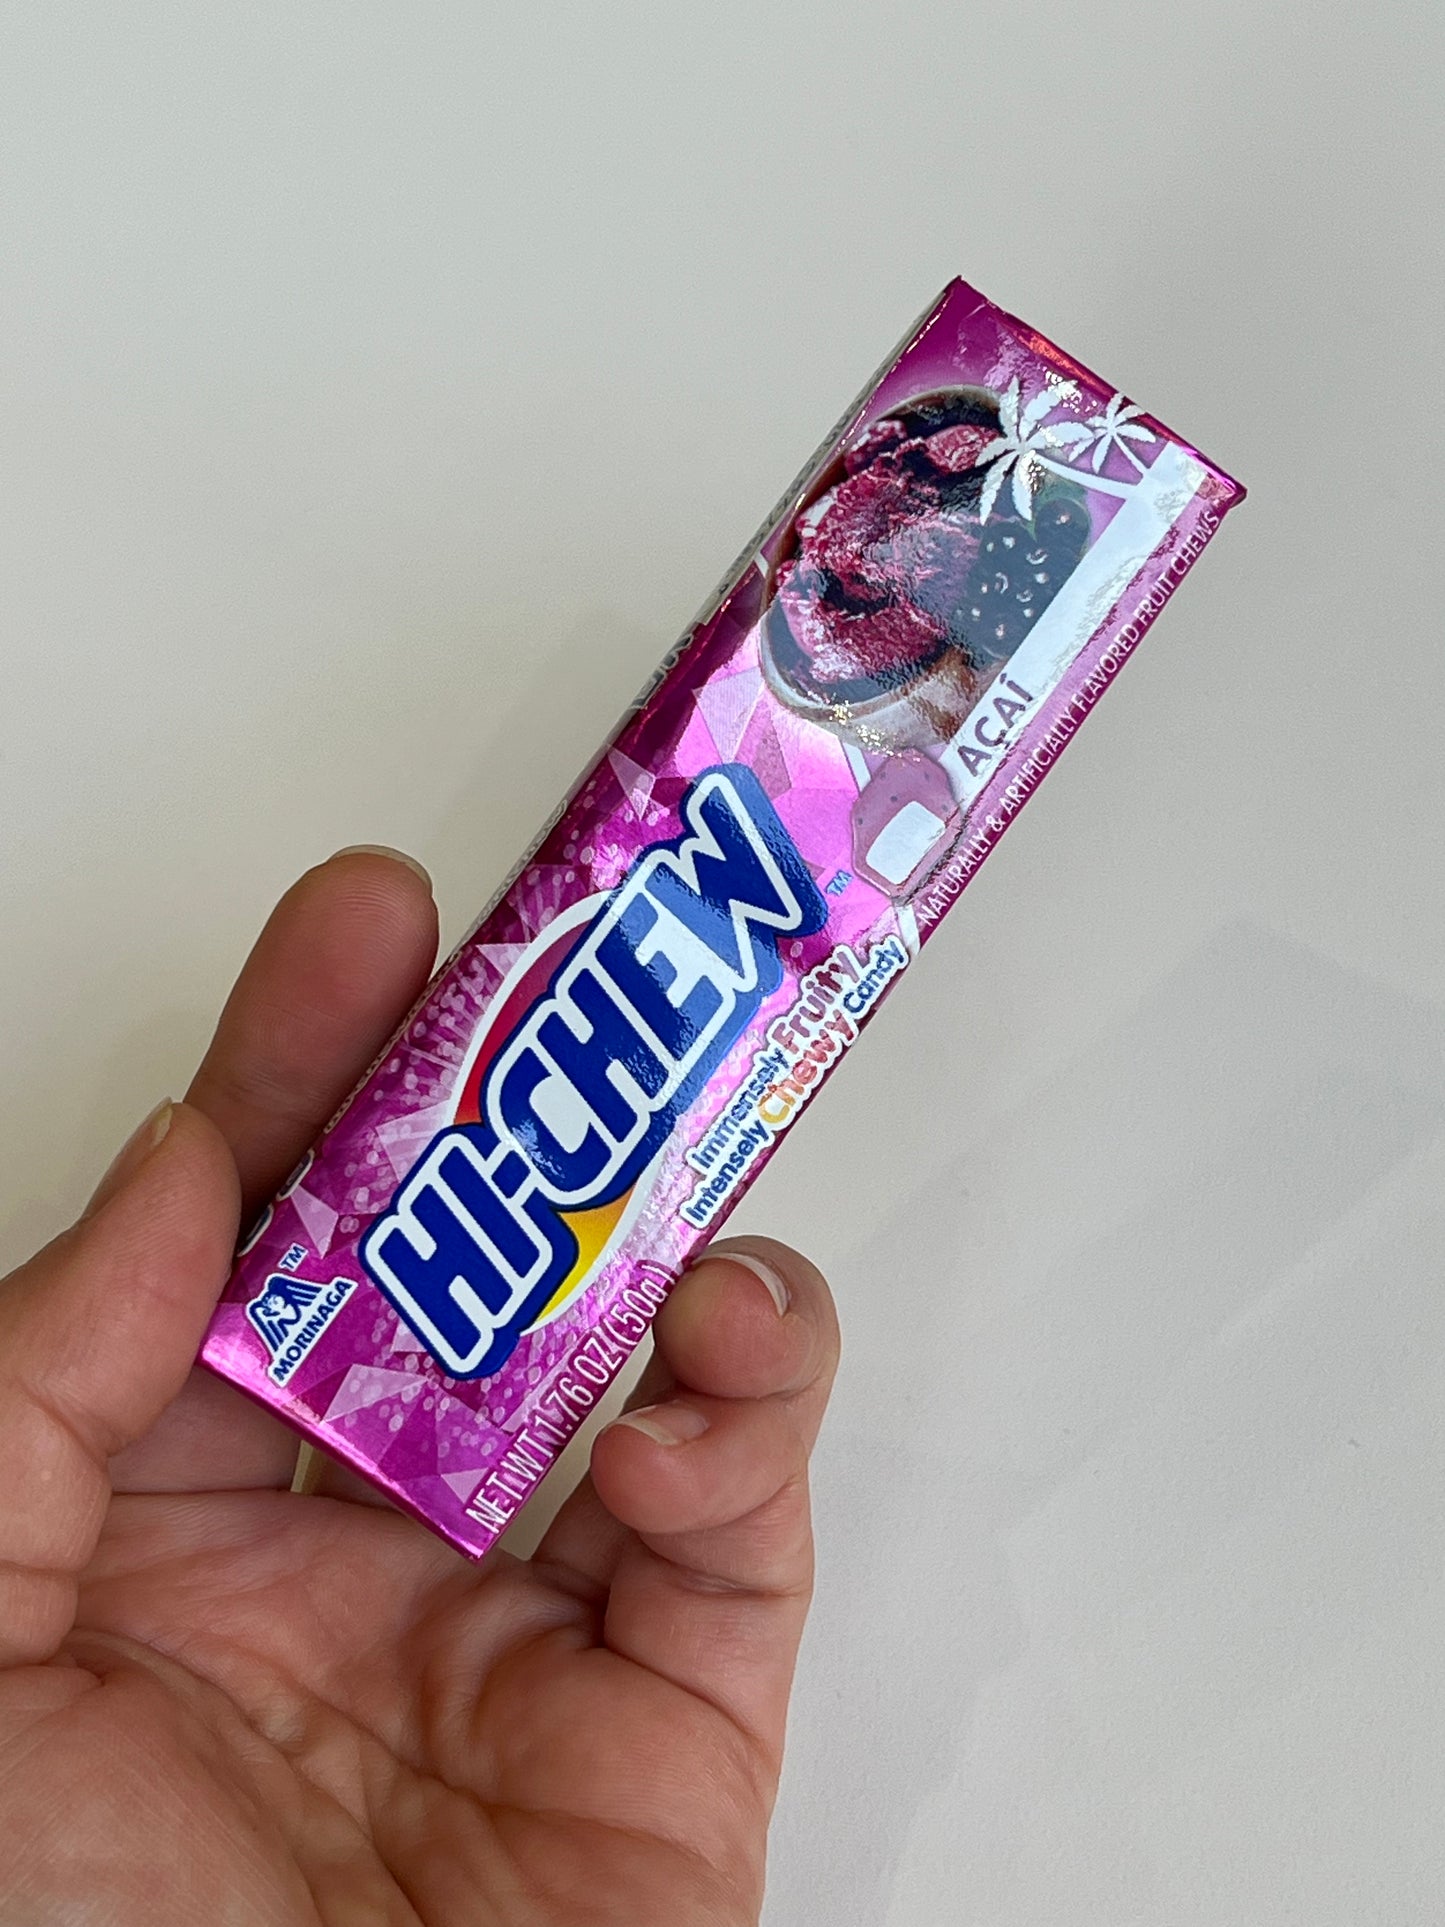 Hi-Chew | Candy Acai